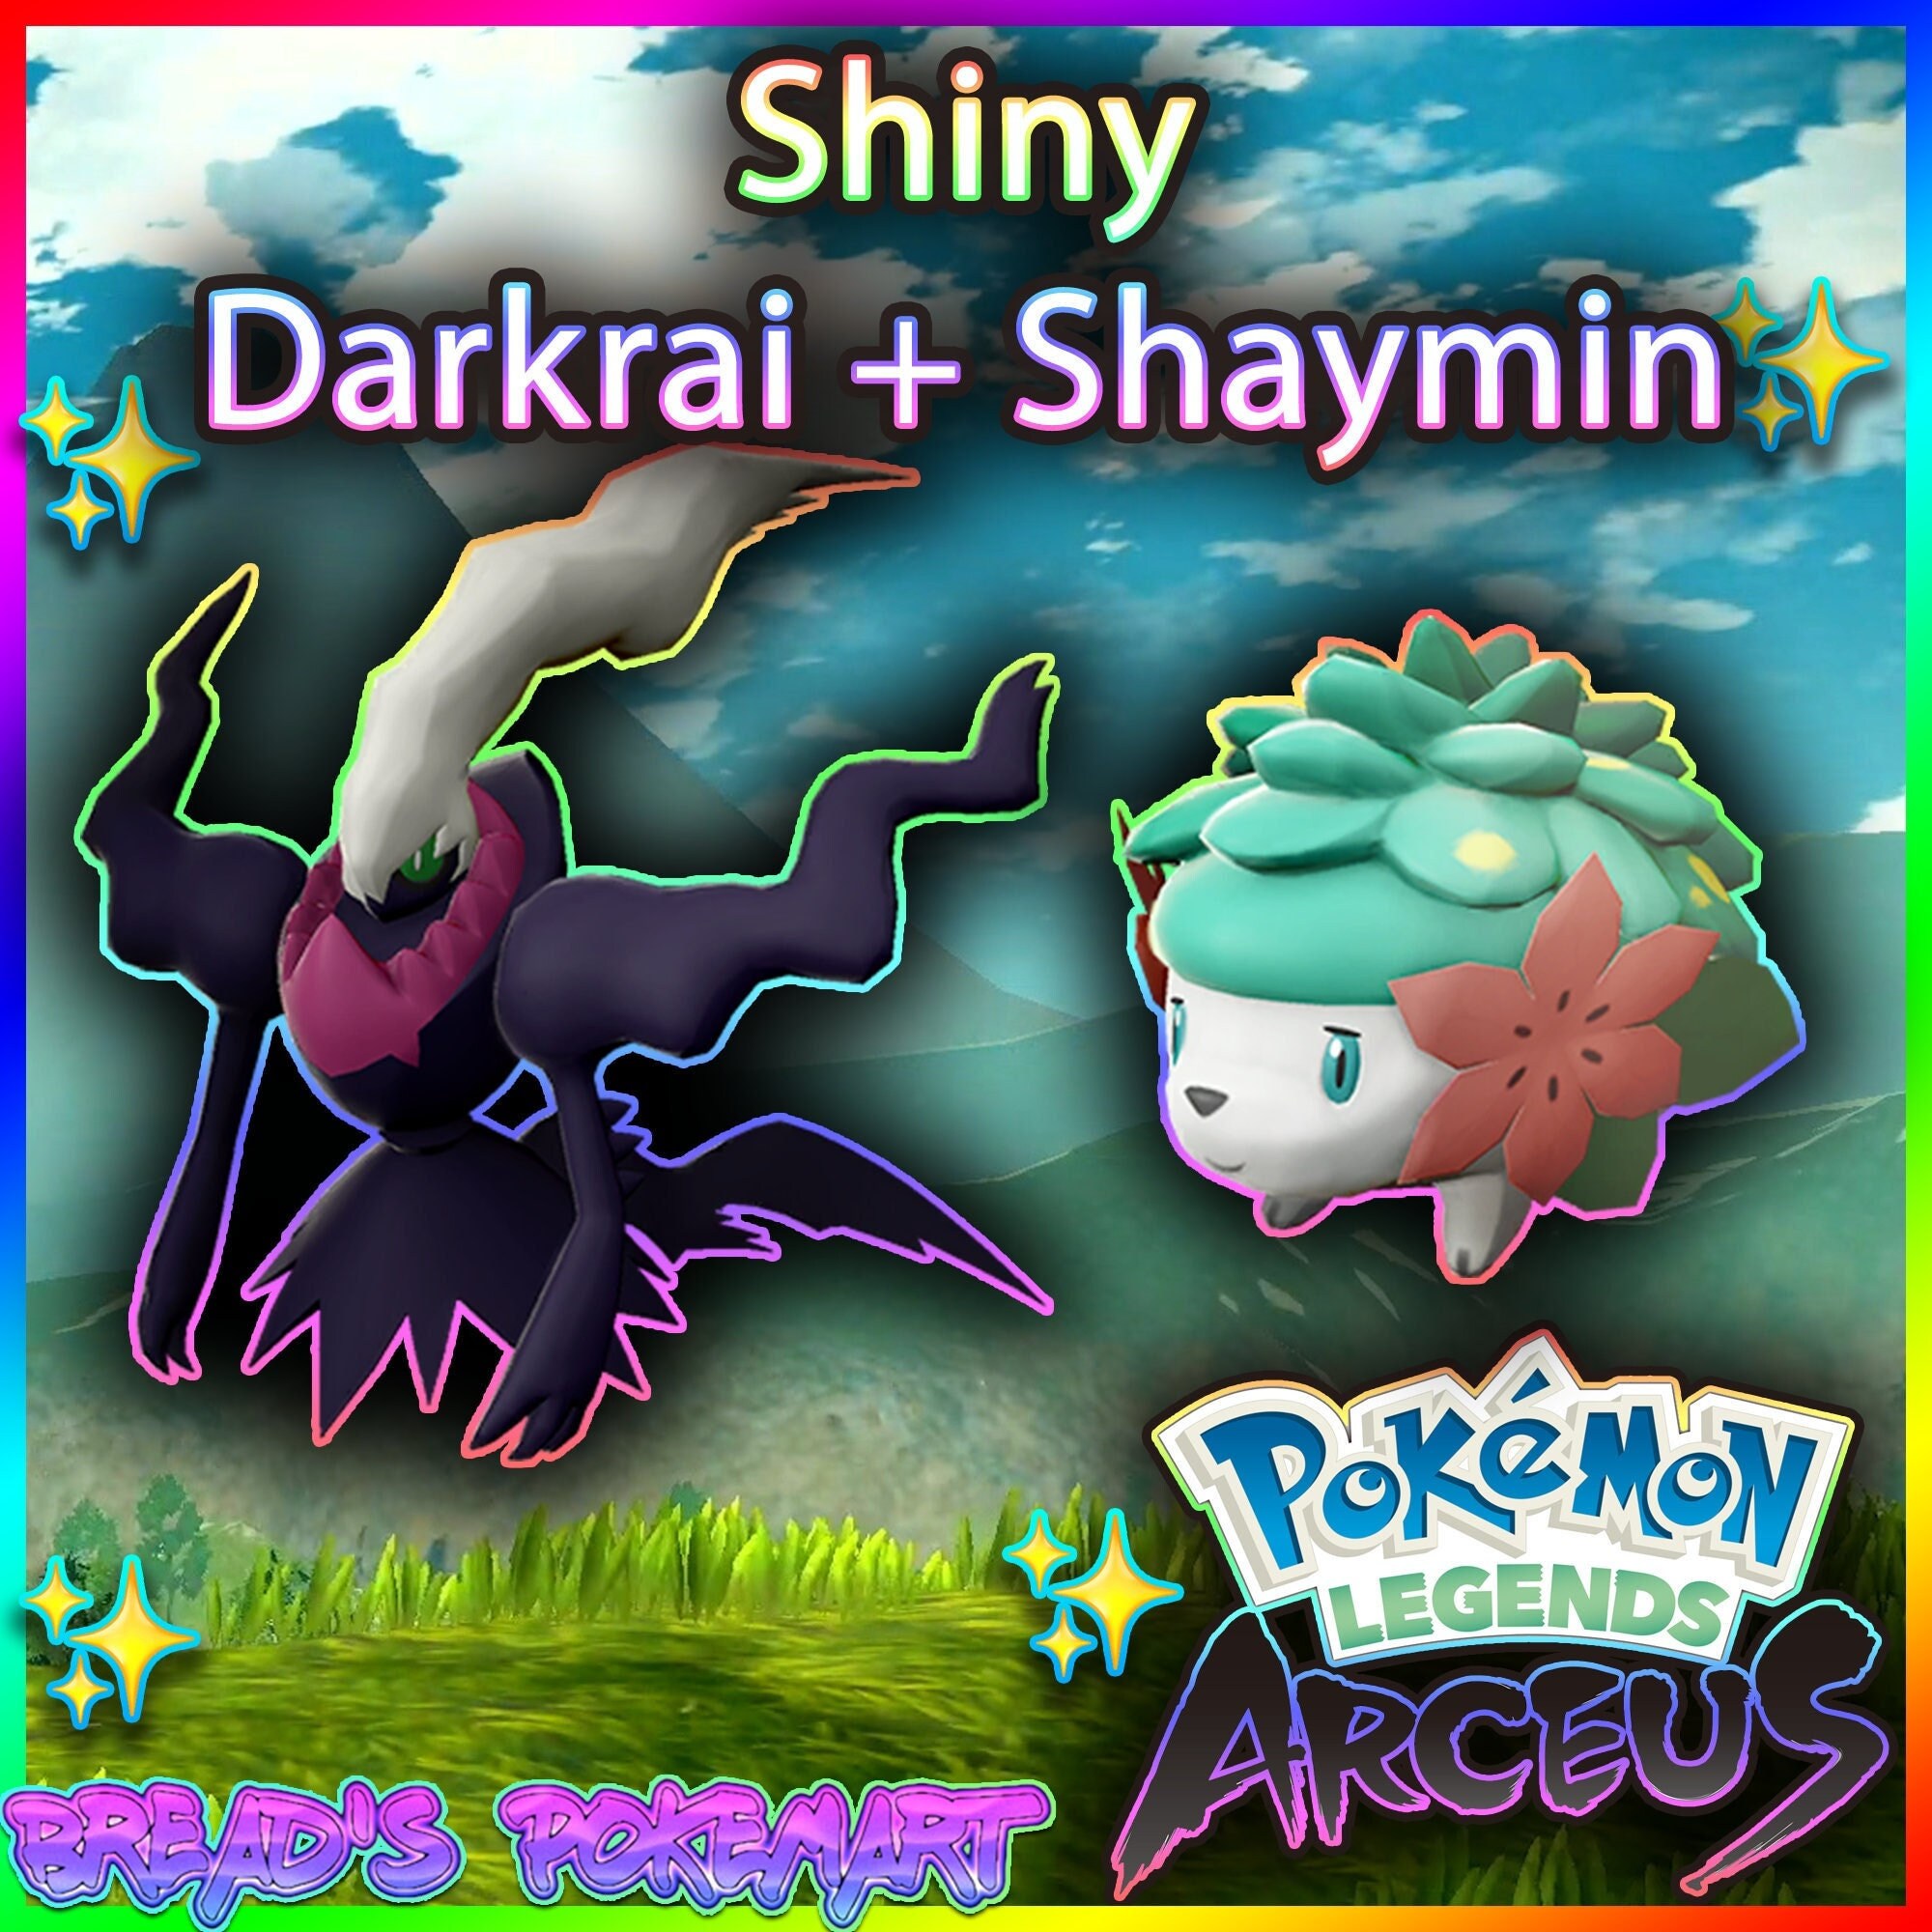 Pokemon GO: Can You Catch Shiny Shaymin?